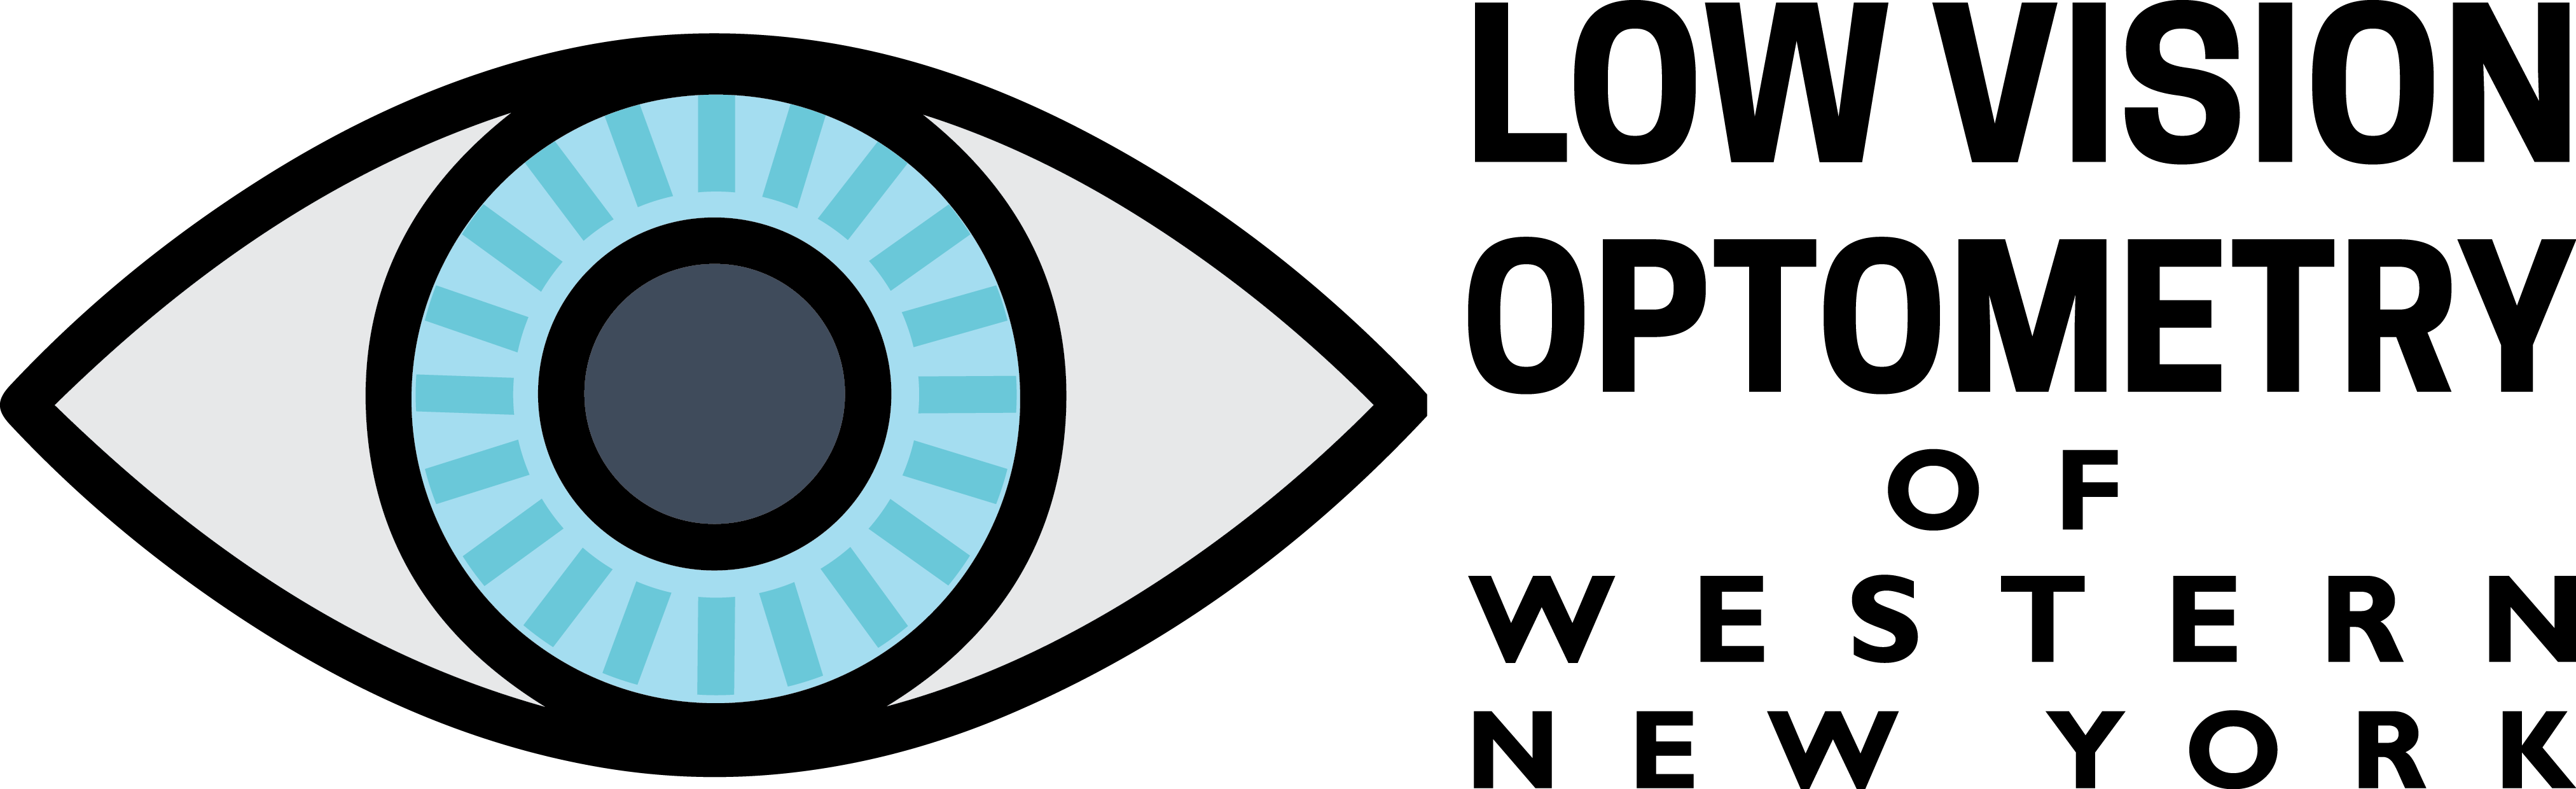 Low Vision Optometry of Western New York logo